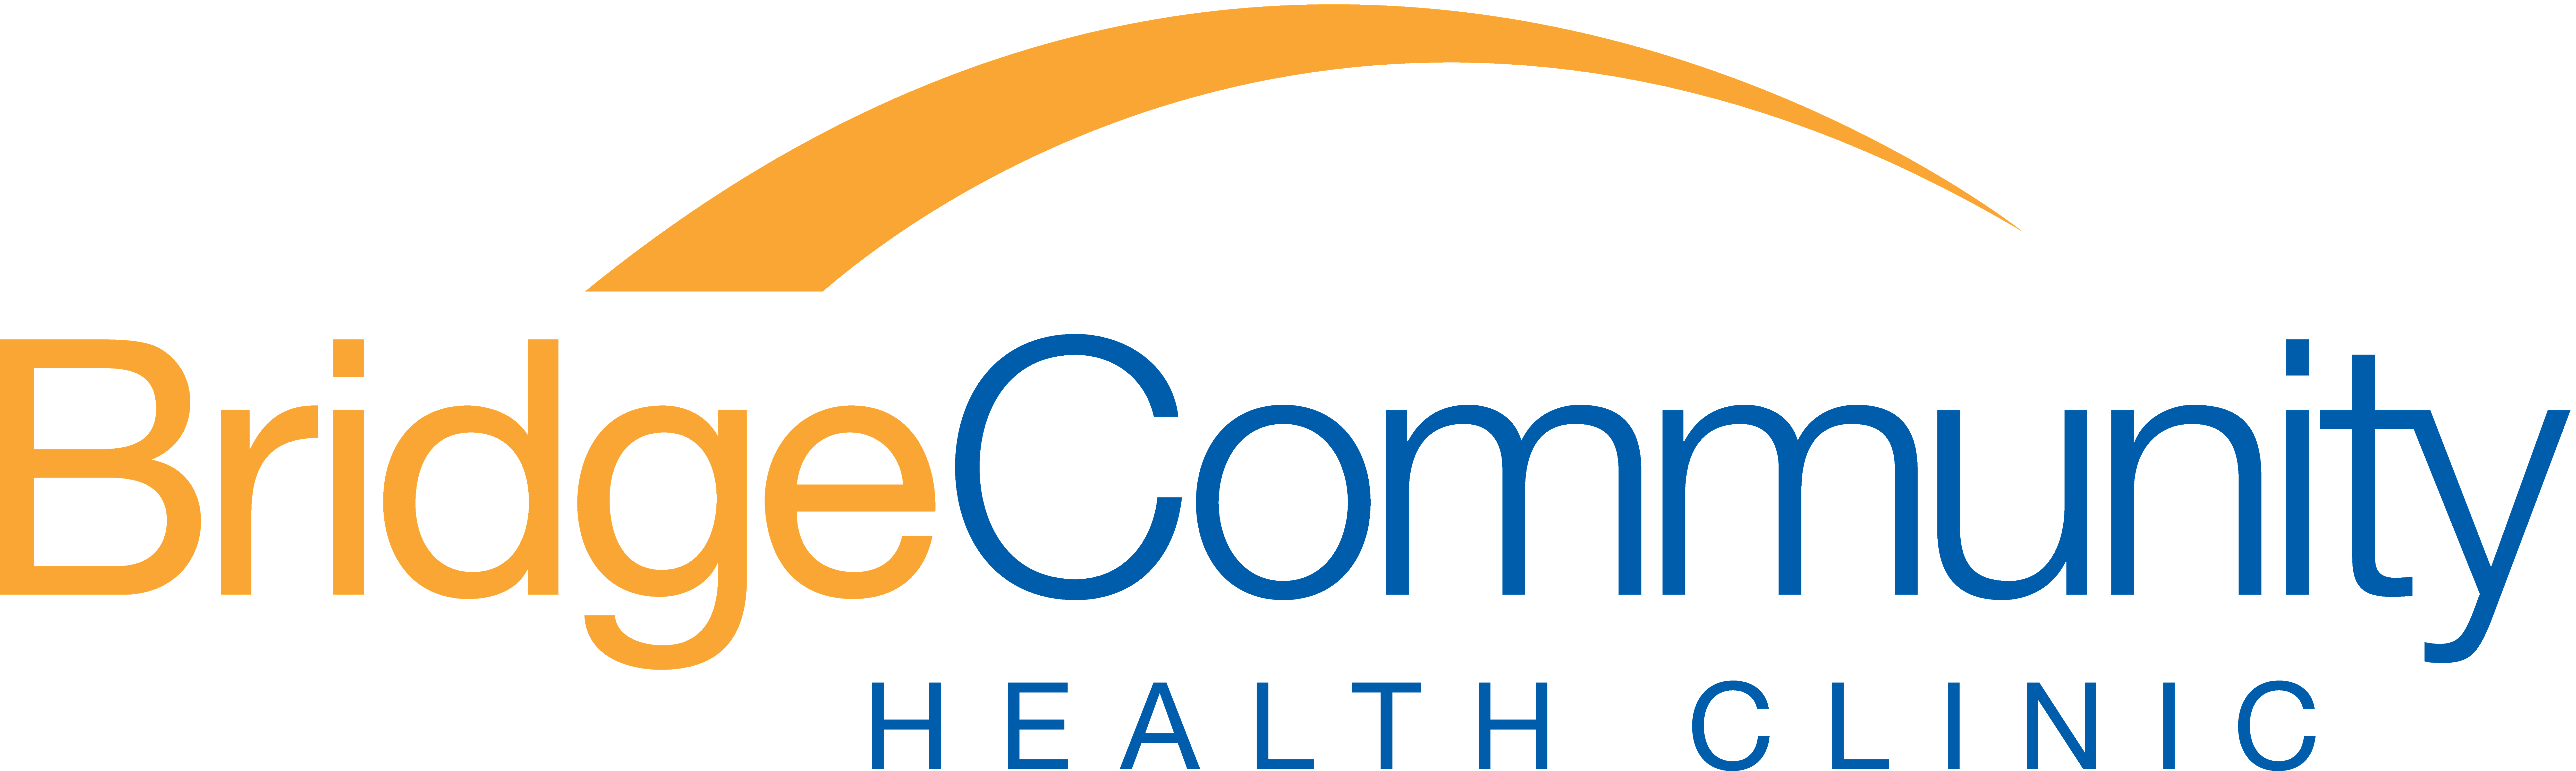 Bridge Community Health Clinic